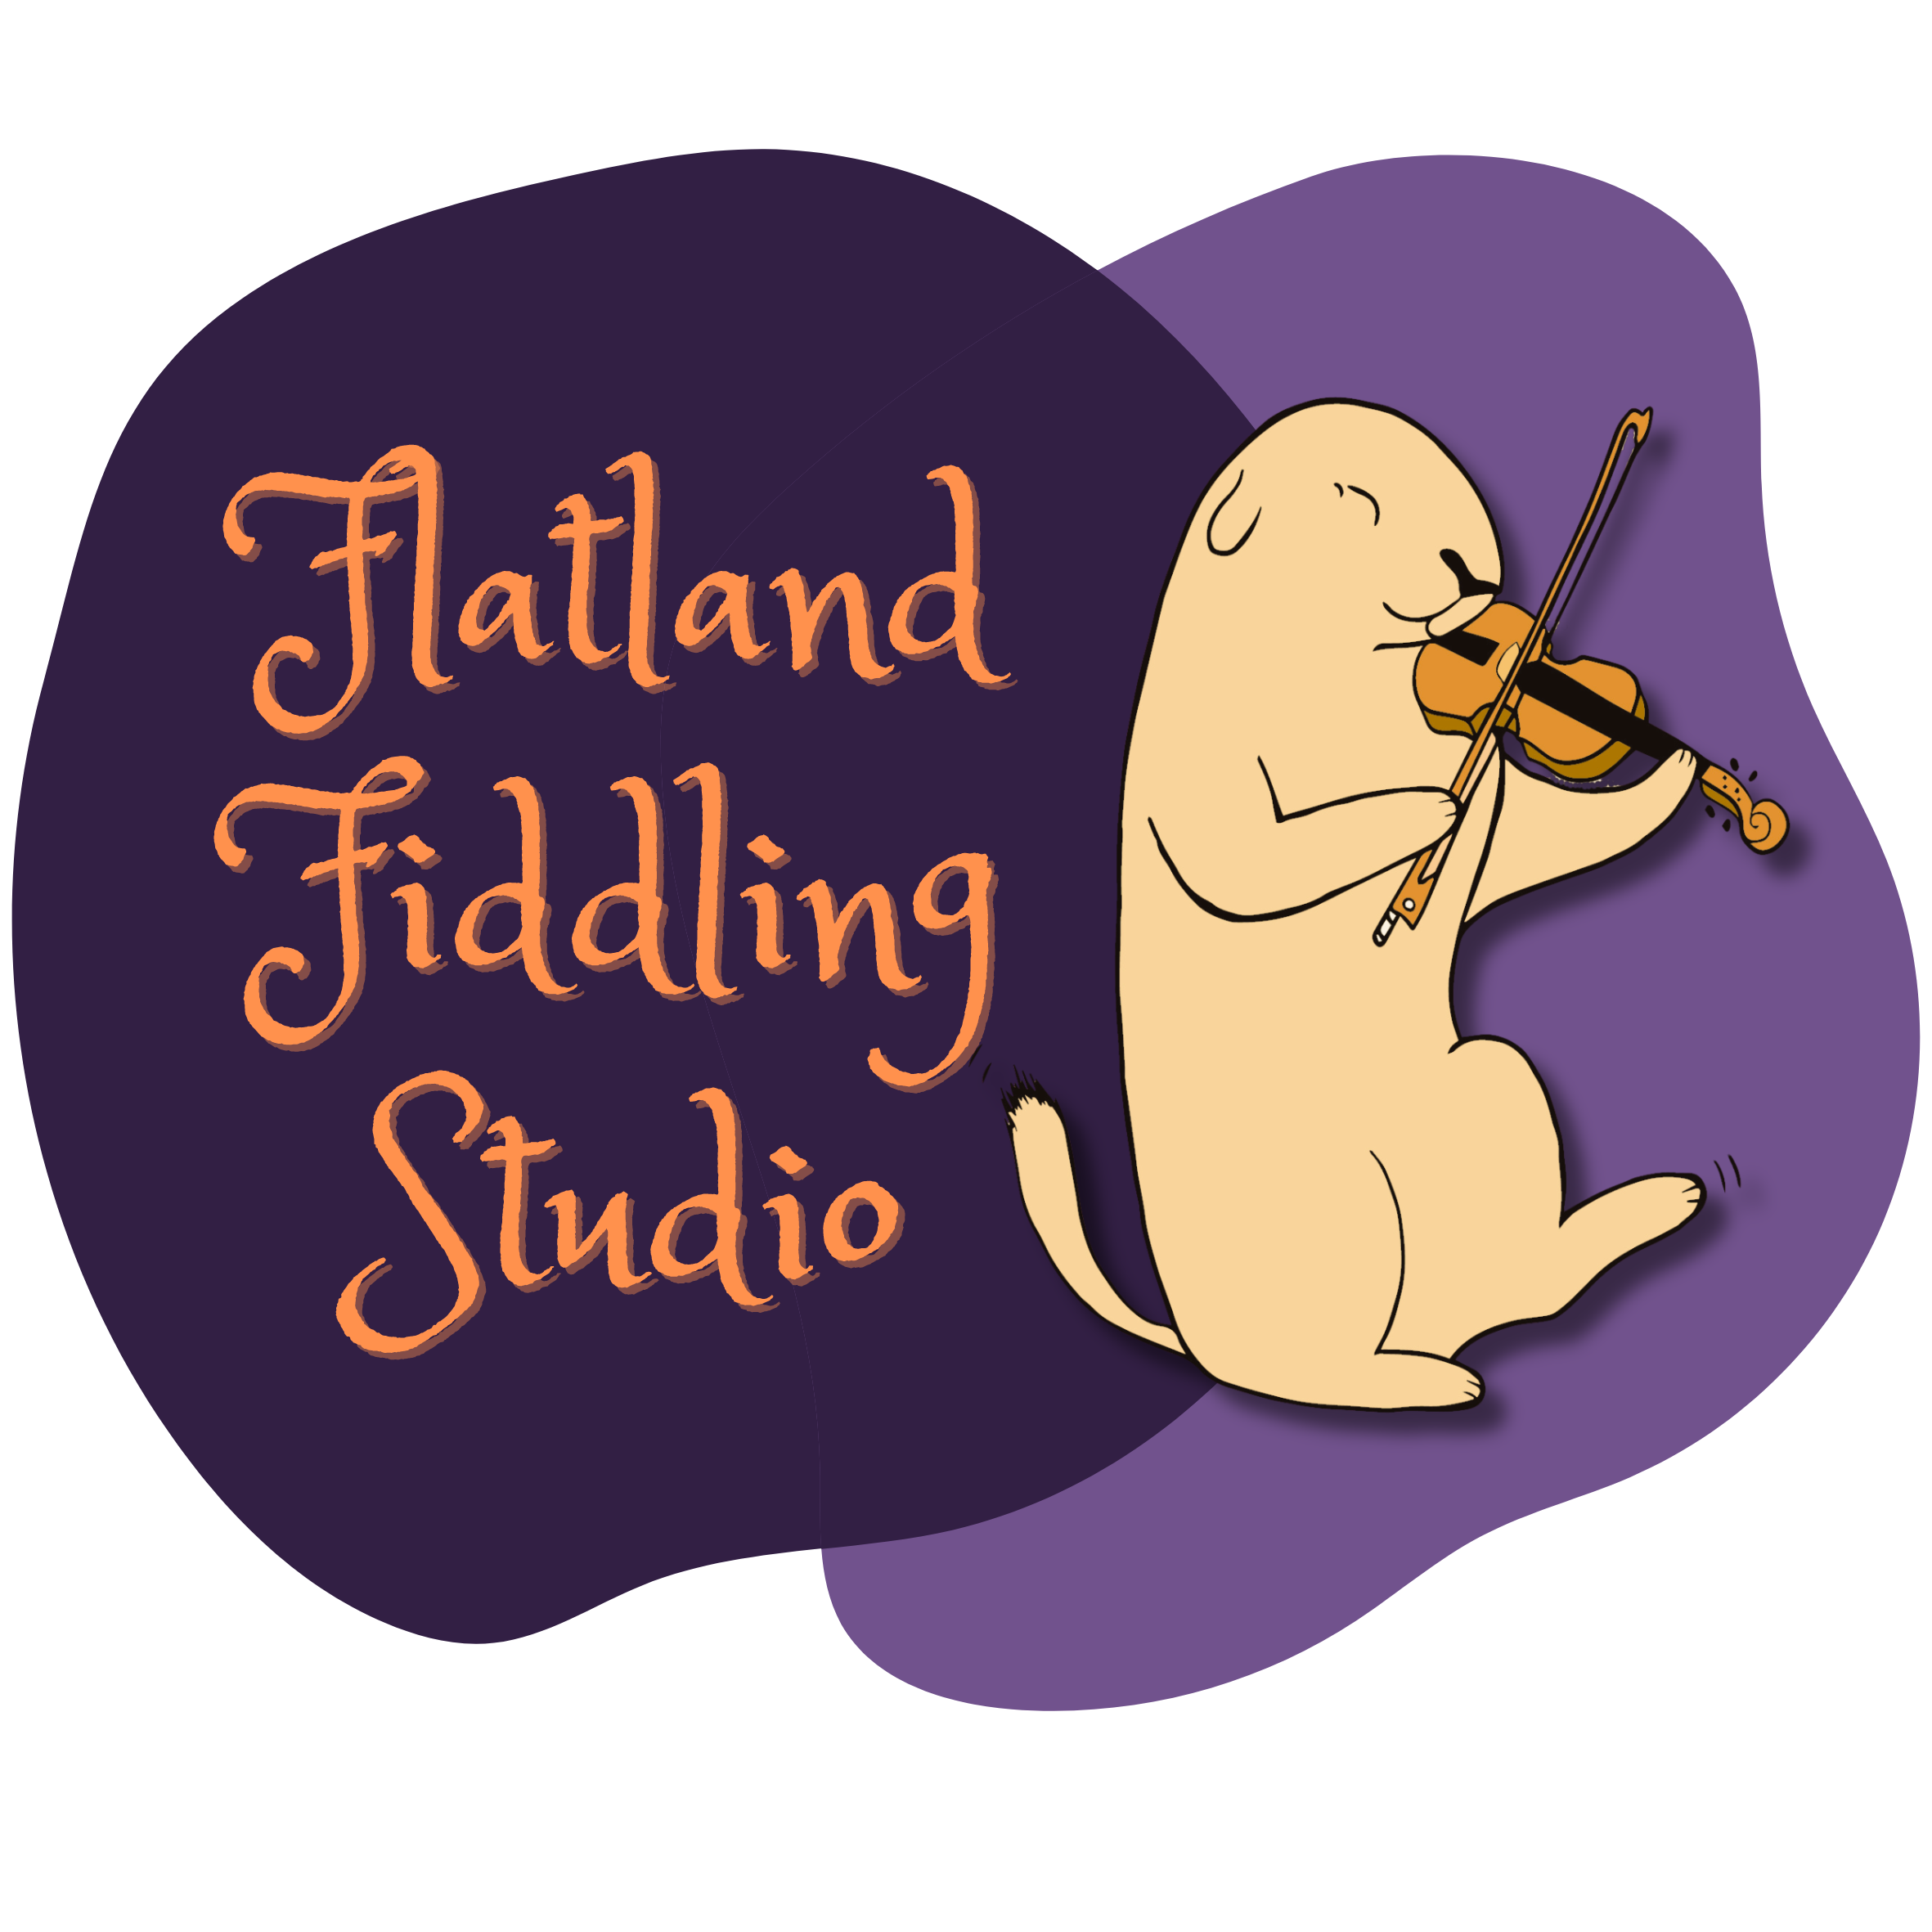 Flatland Fiddling Studio